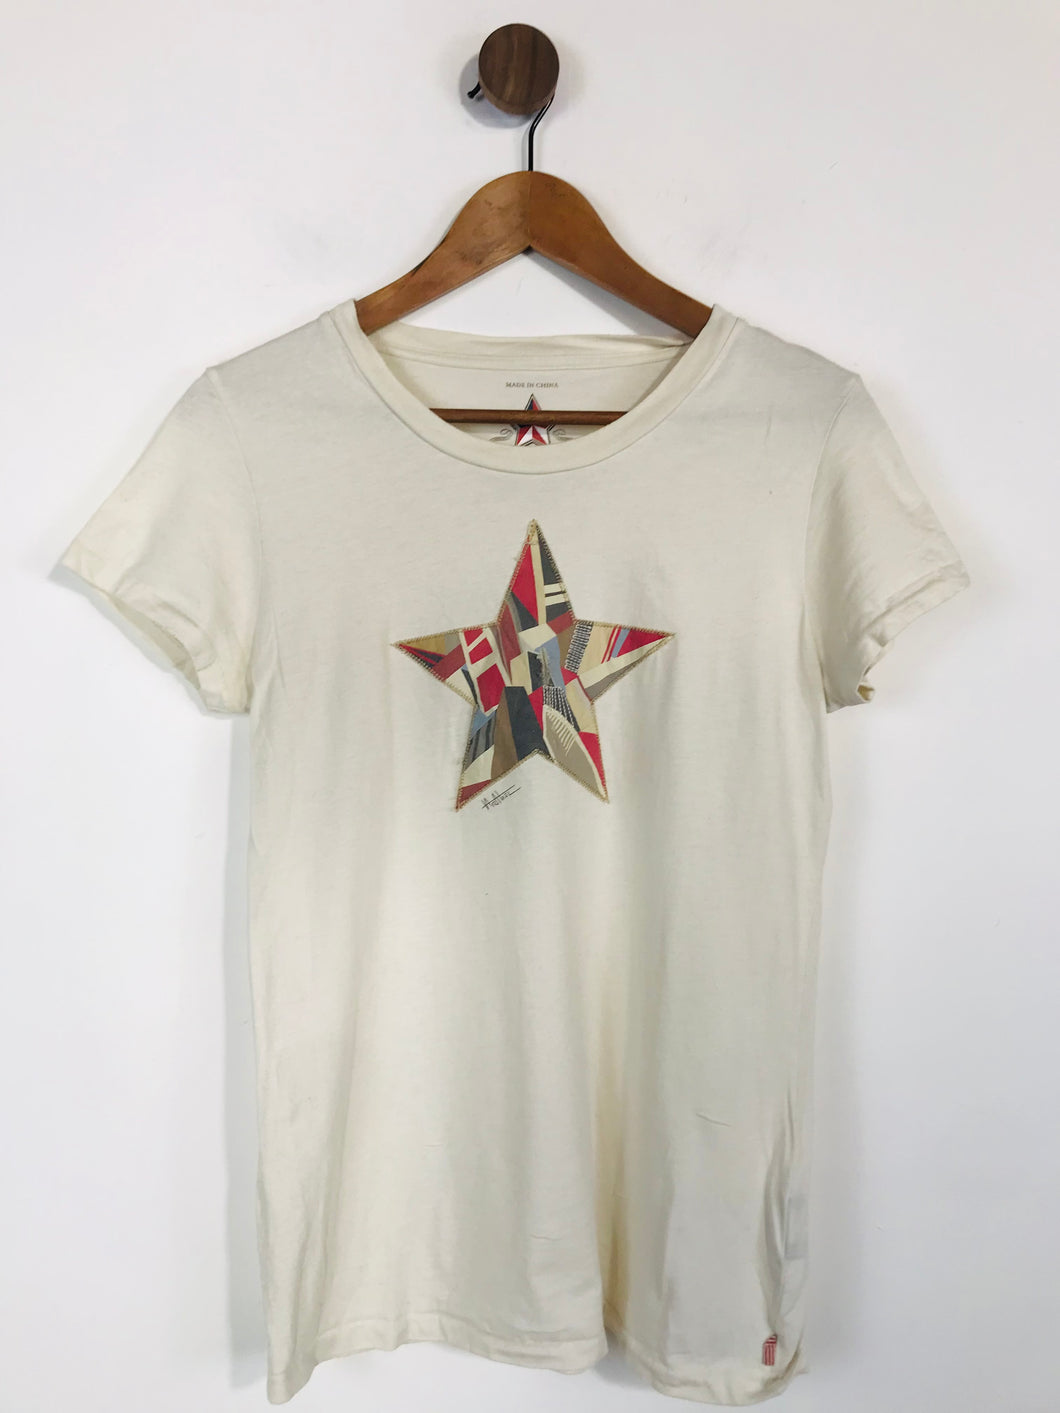 Ralph Lauren Women's Embroidered T-Shirt | M UK10-12 | White